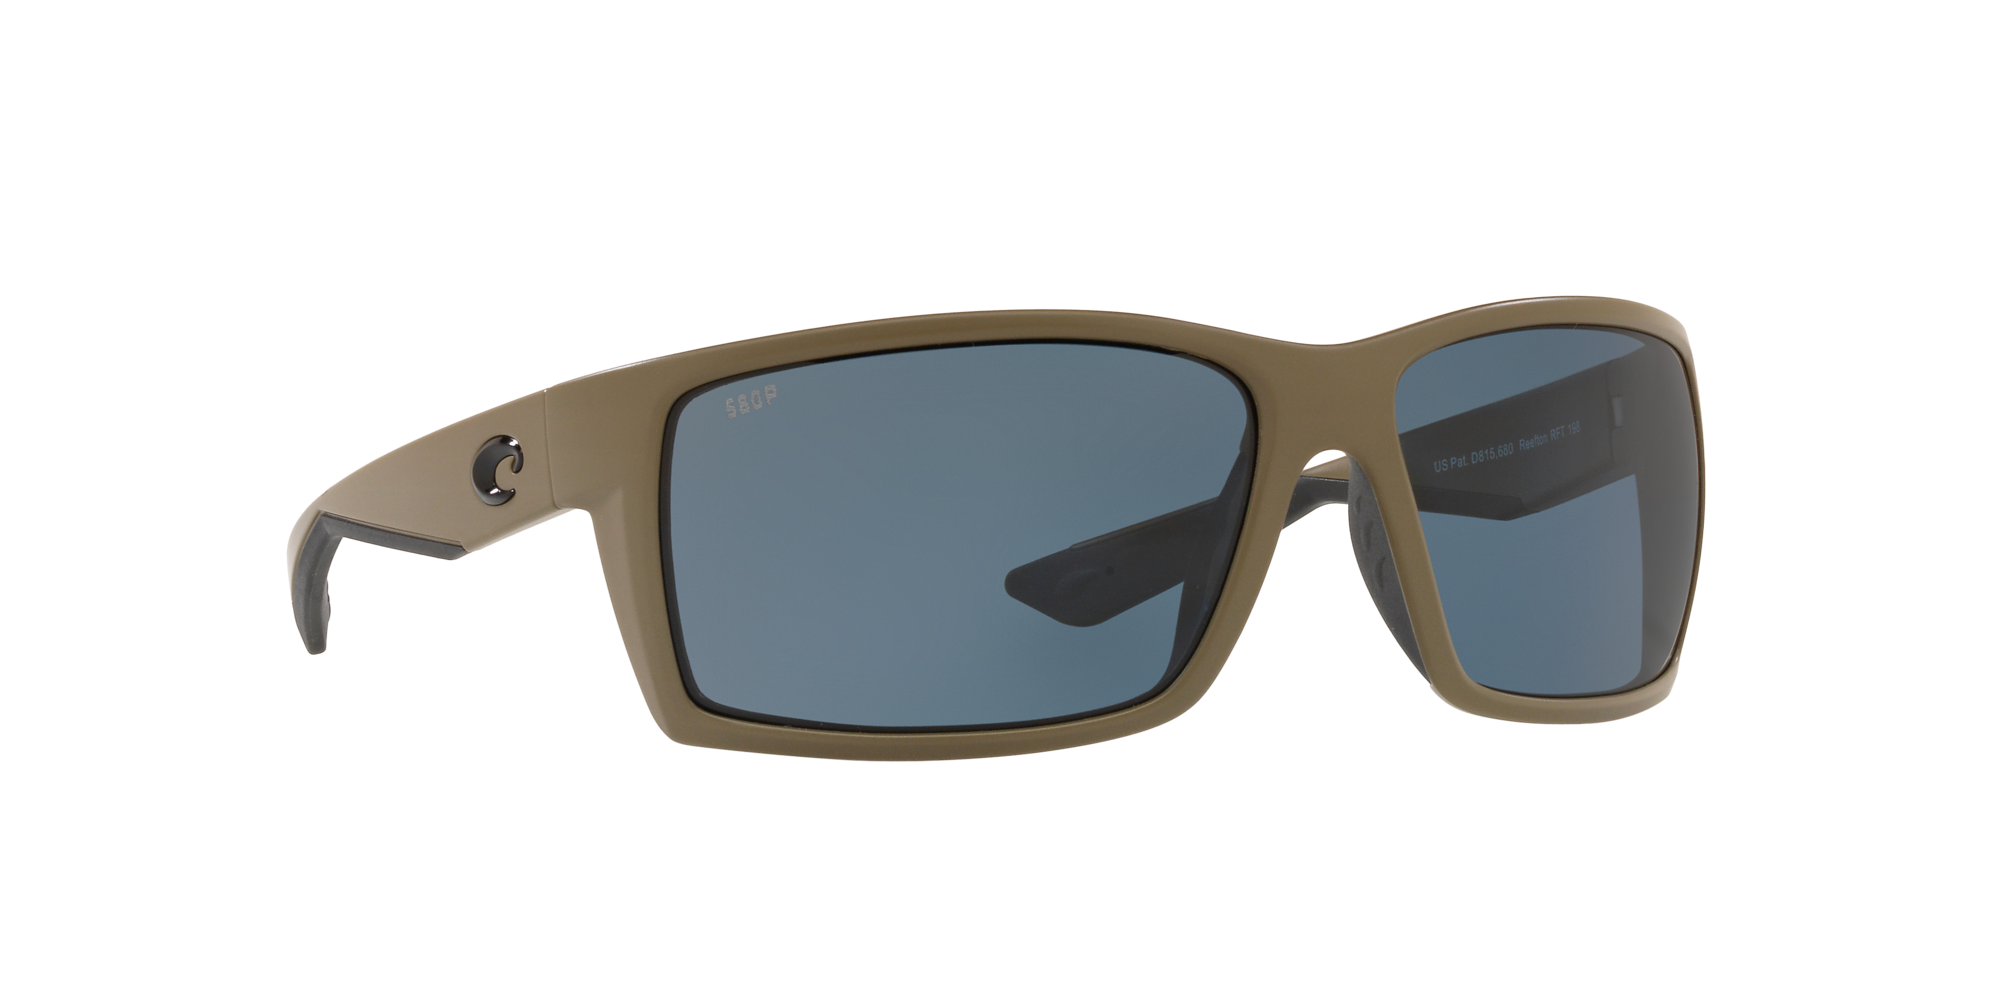 Reefton sunglasses